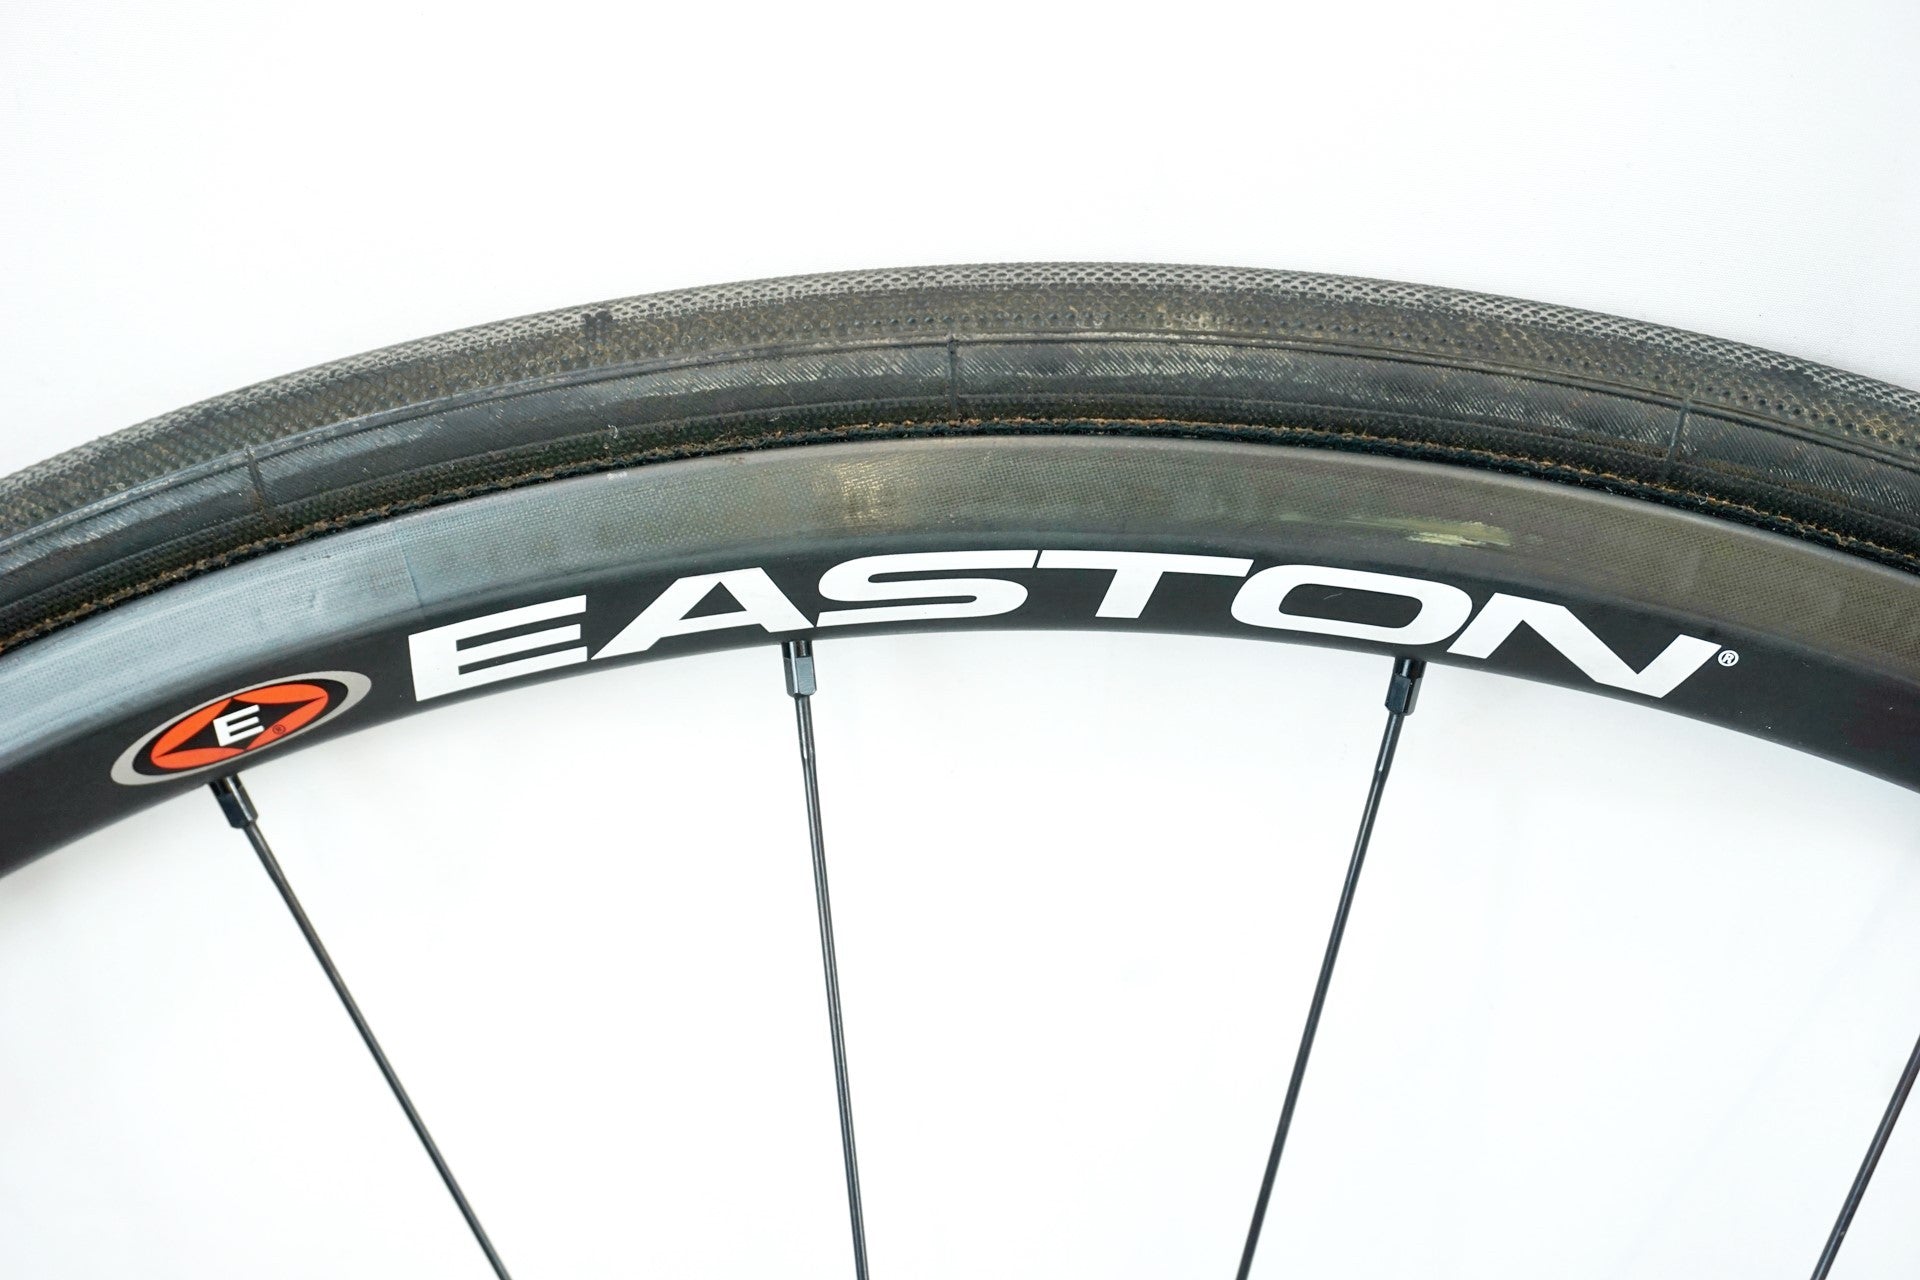 EASTON 「イーストン」 EC90 SLX シマノ 10速 ホイールセット / 有明ガーデン店